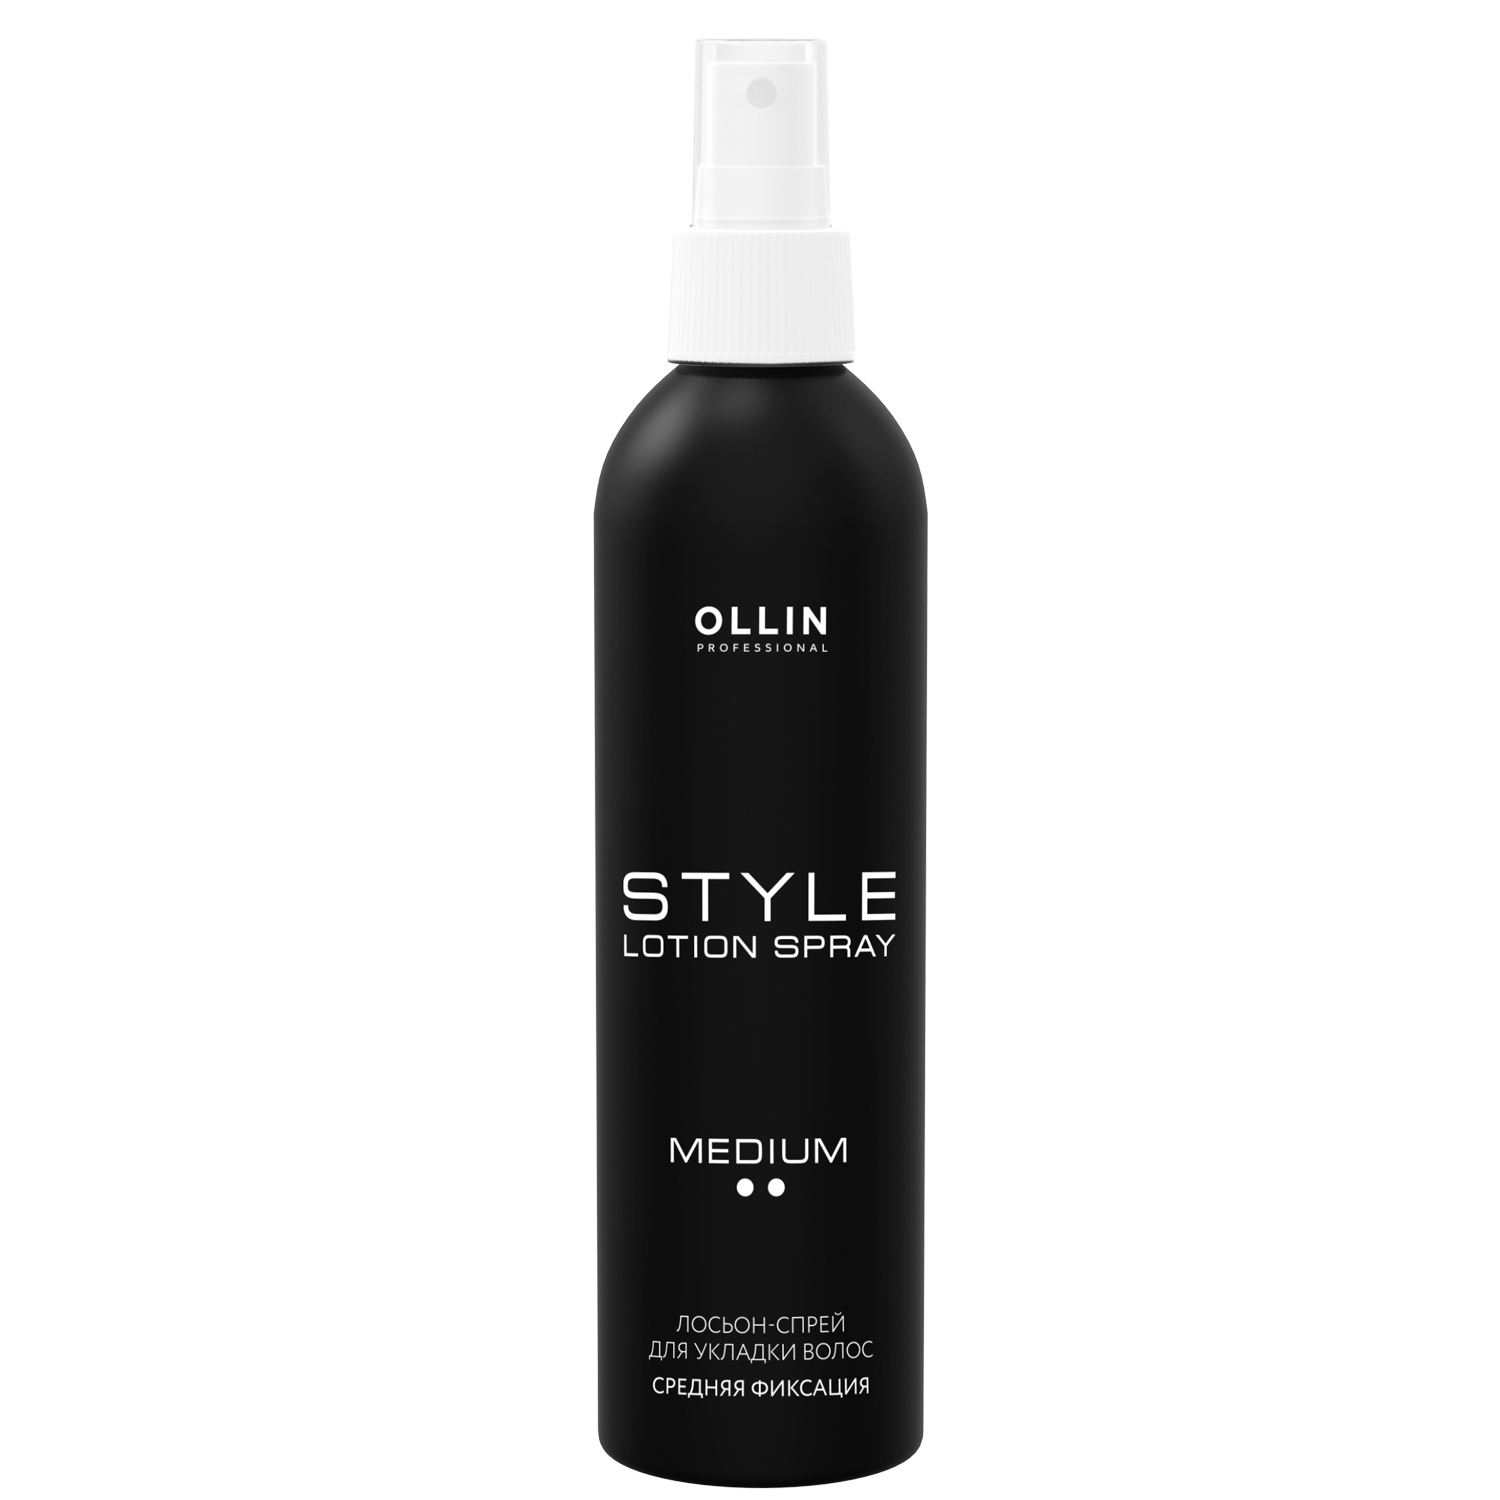 Ollin Professional Лосьон-спрей для укладки волос средней фиксации, 250 мл (Ollin Professional, Style) лосьон спрей для укладки волос средней фиксации style medium ollin 250мл